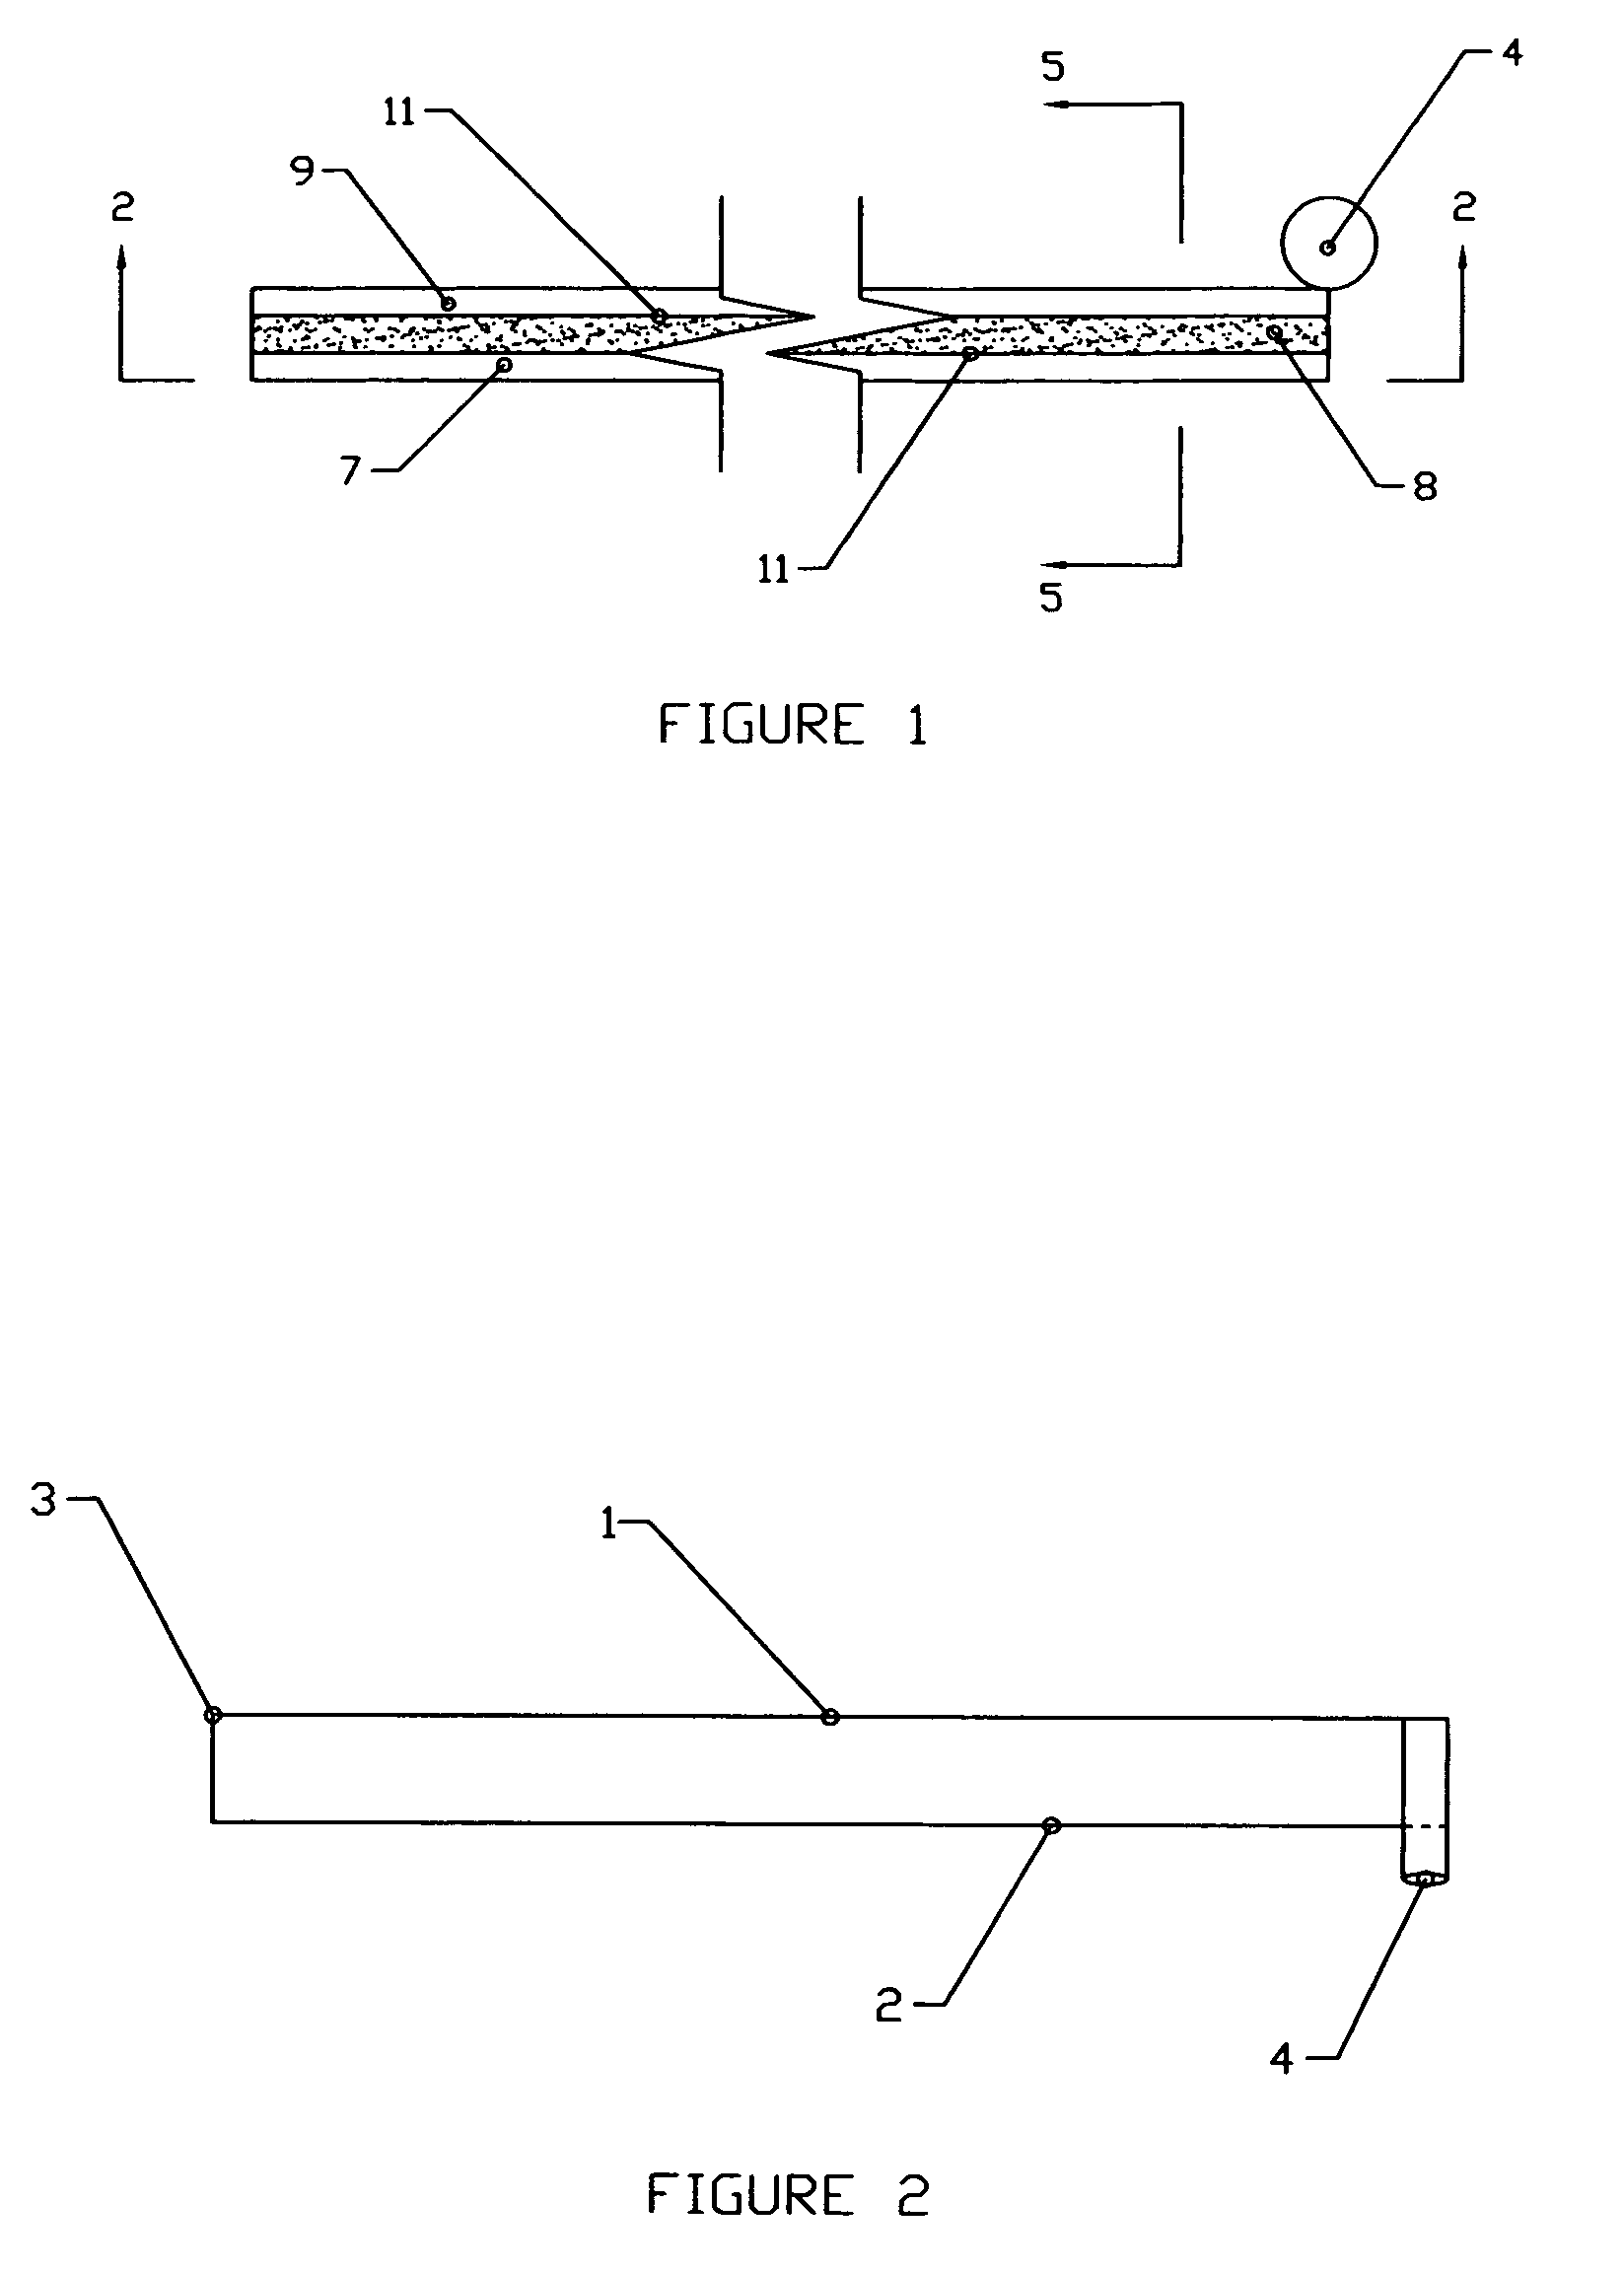 System for feeding a liquid fluid through a filter